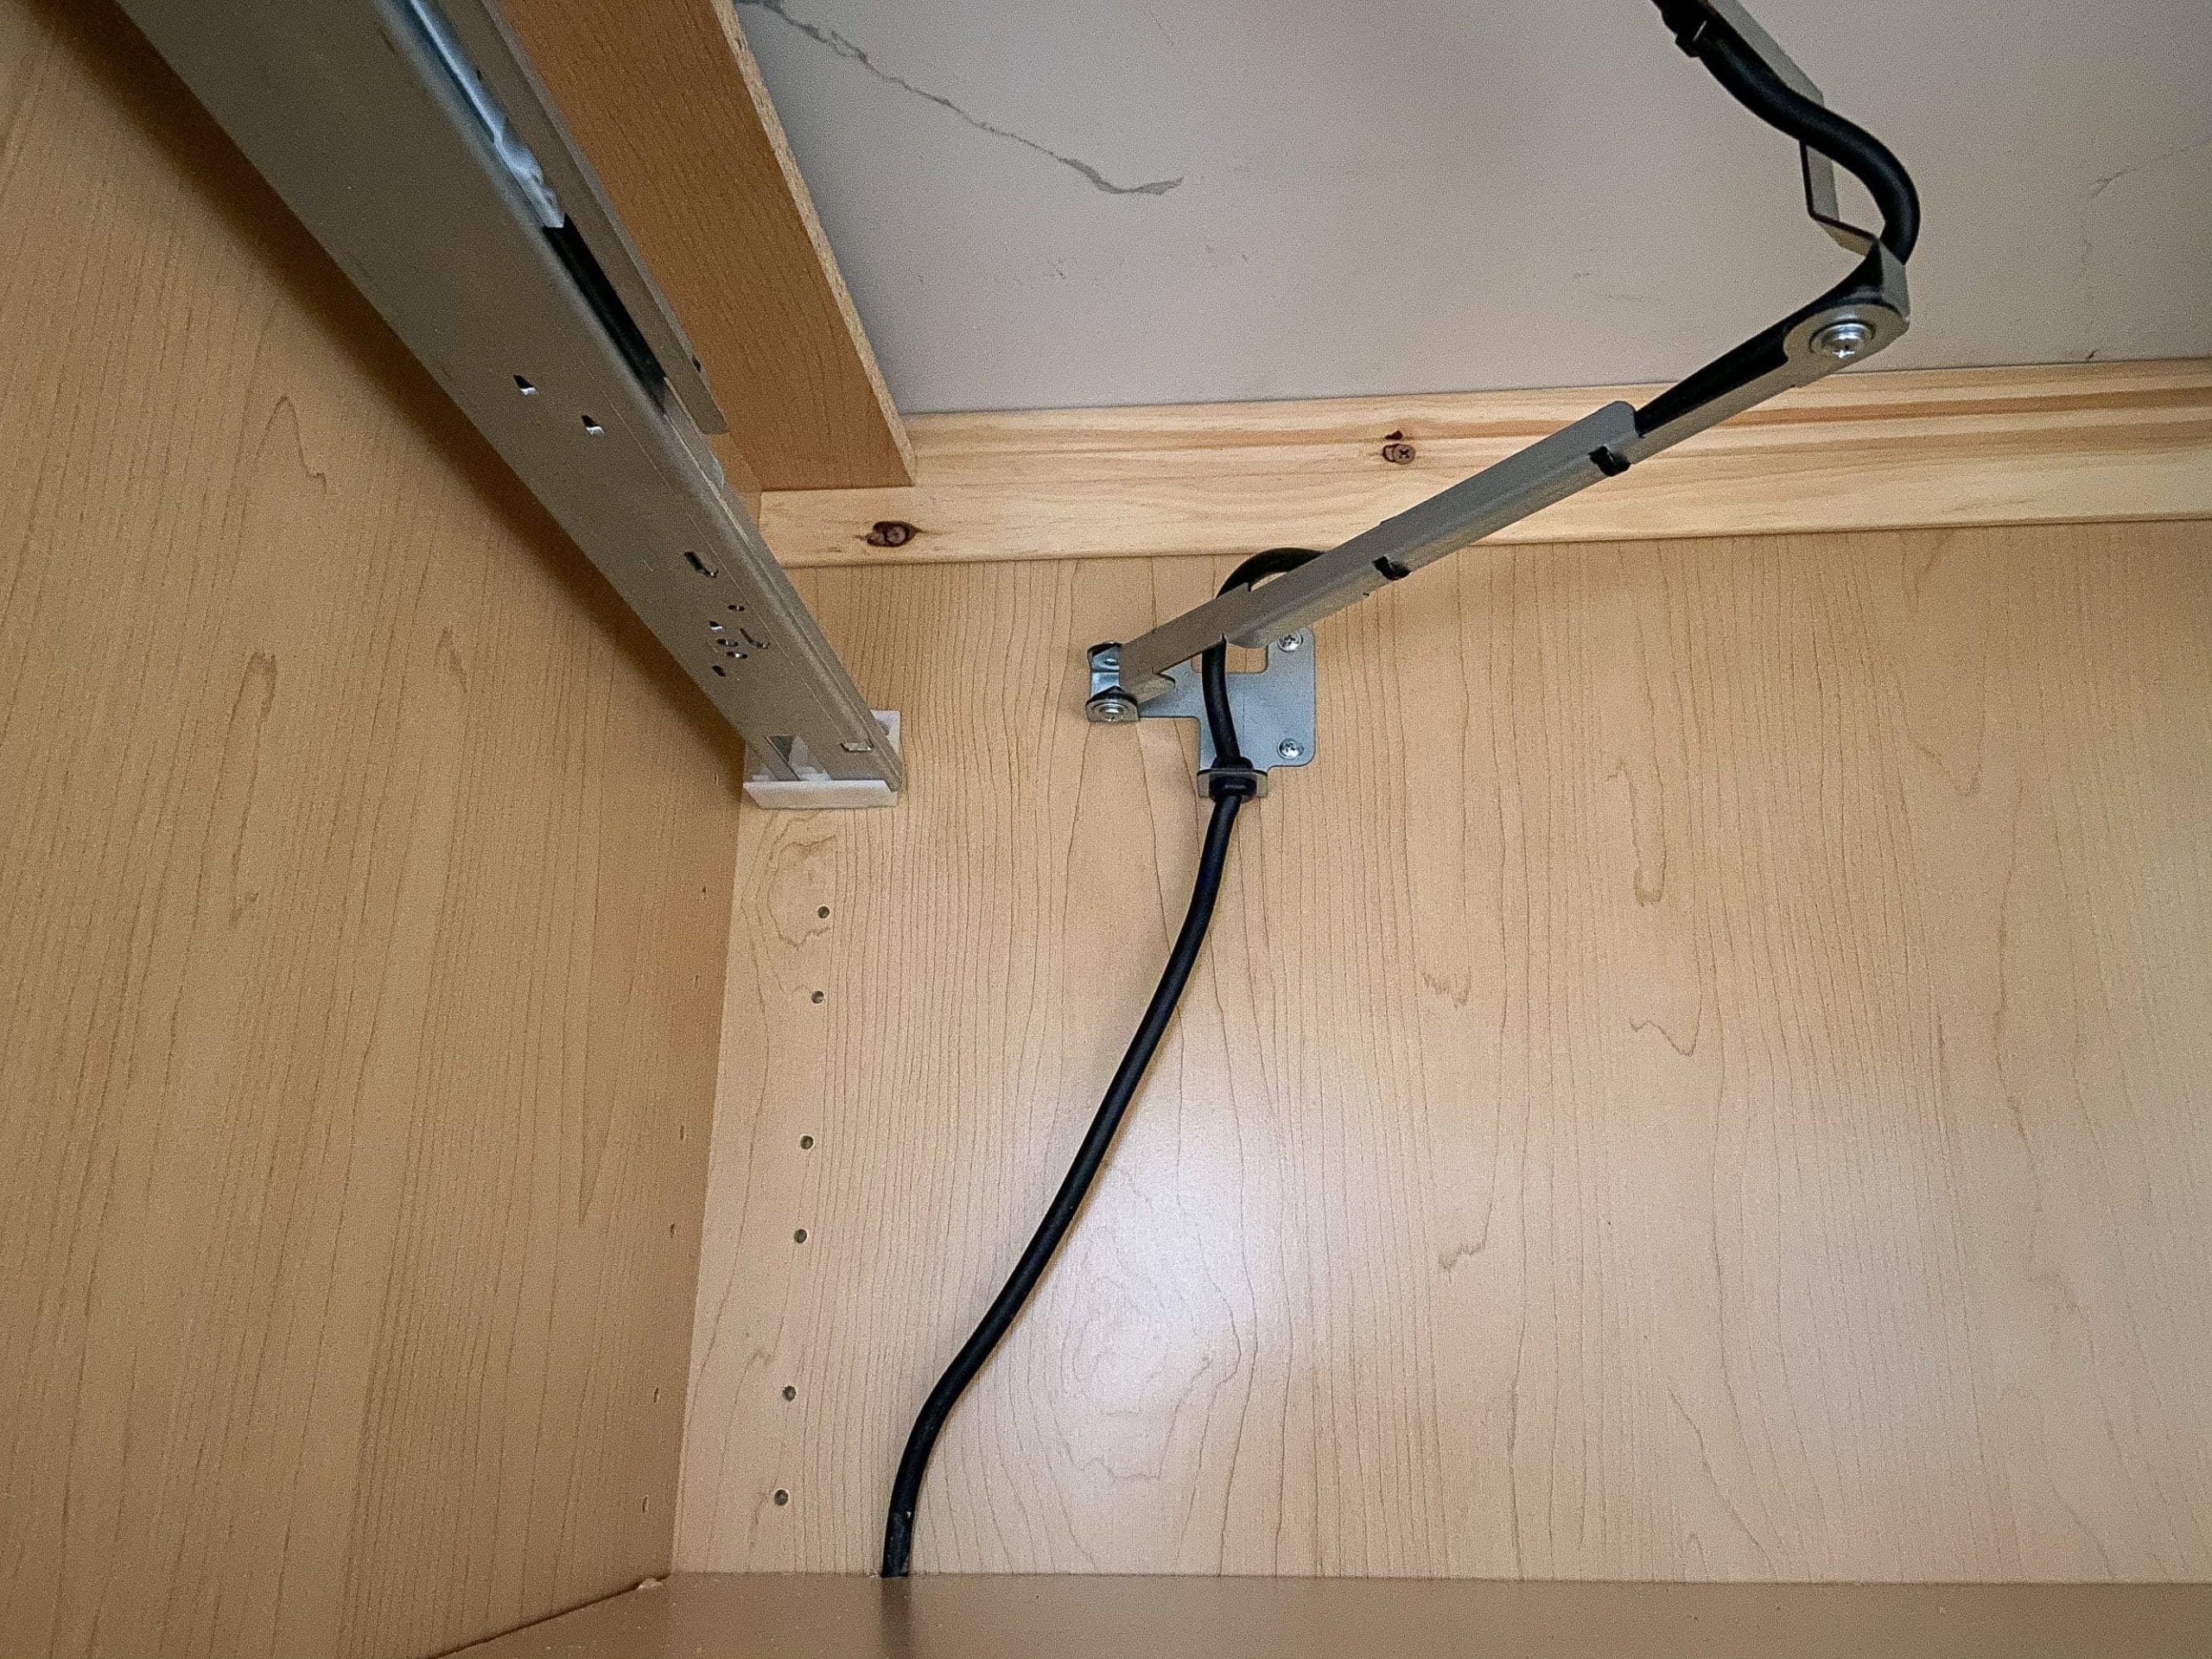 Mounting bracket beneath the charging drawer